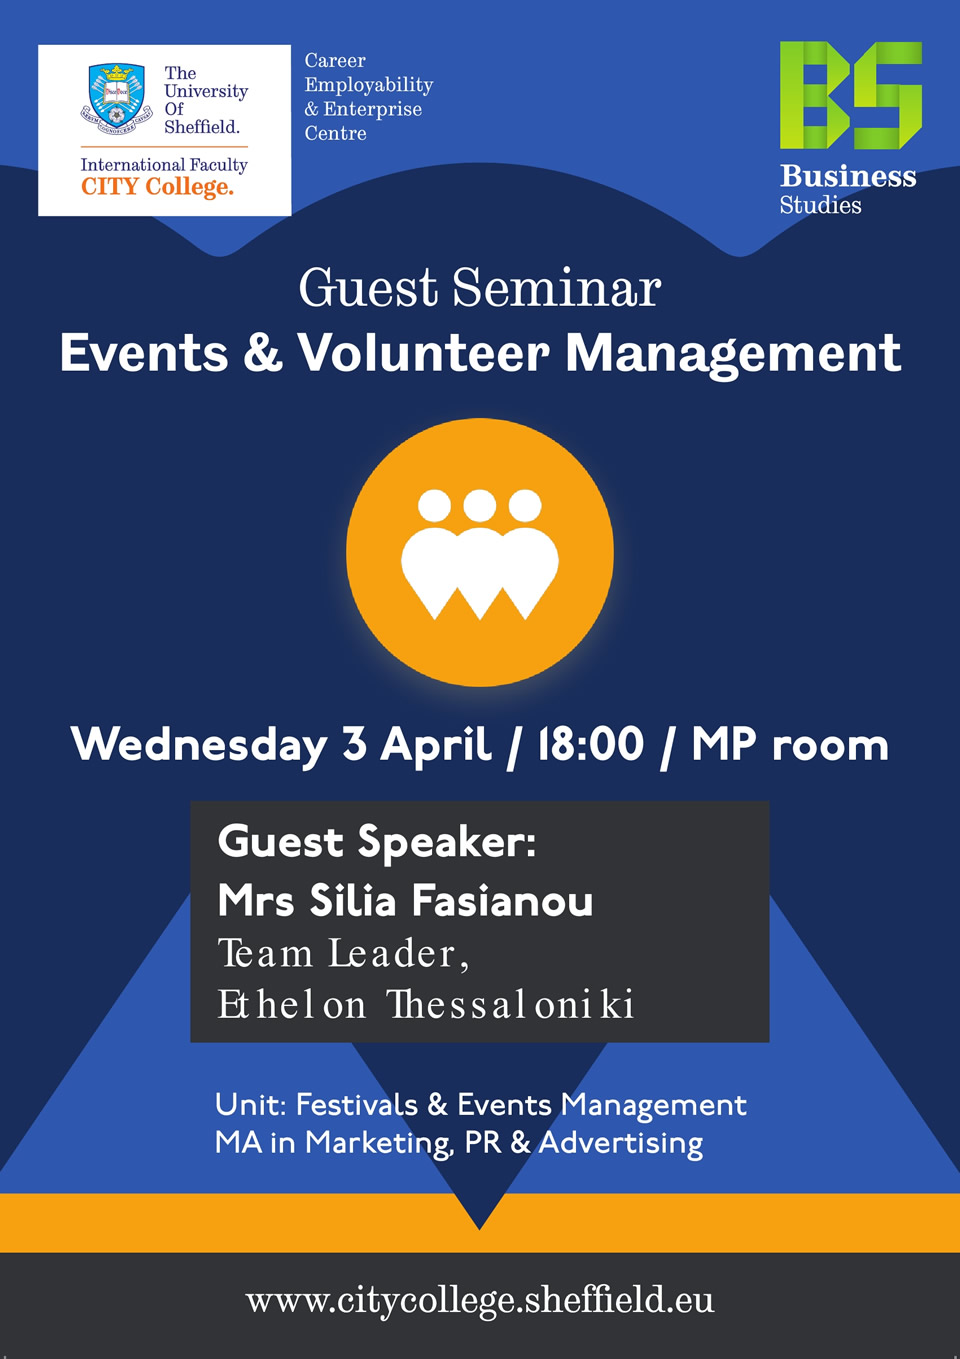 Guest Seminar on Events & Volunteer Management